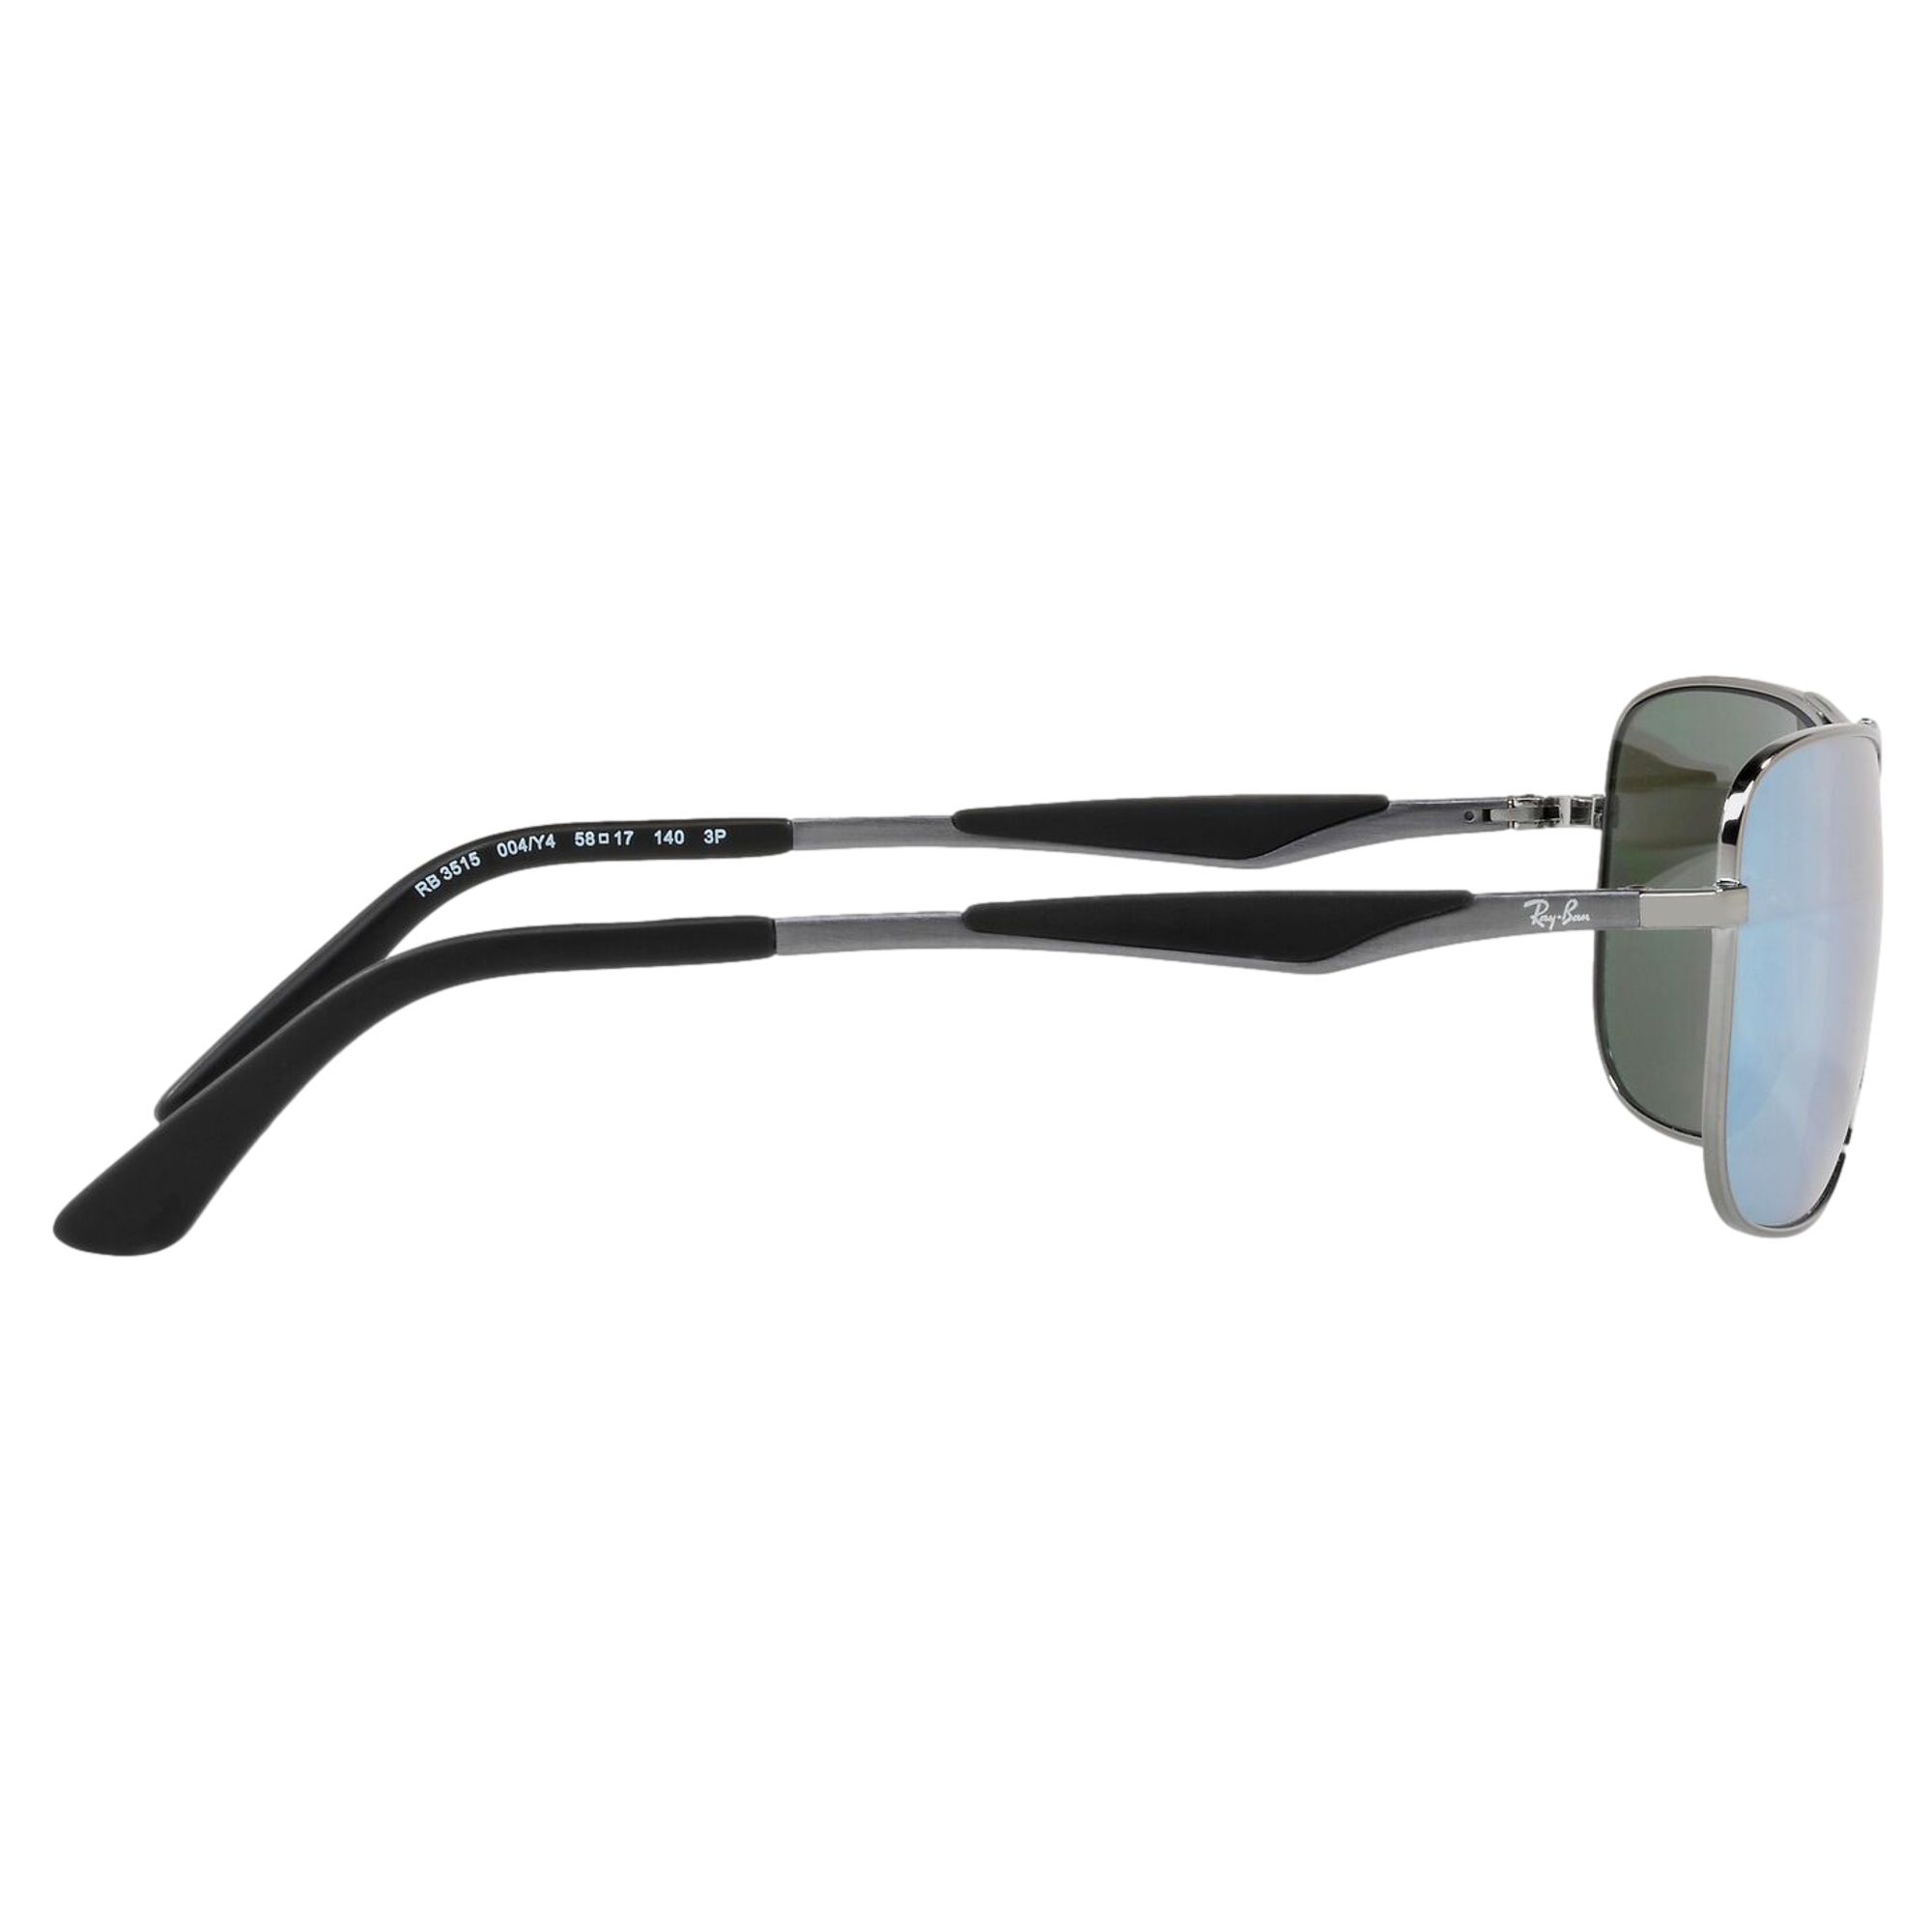 RB3515 Polarized Sunglasses